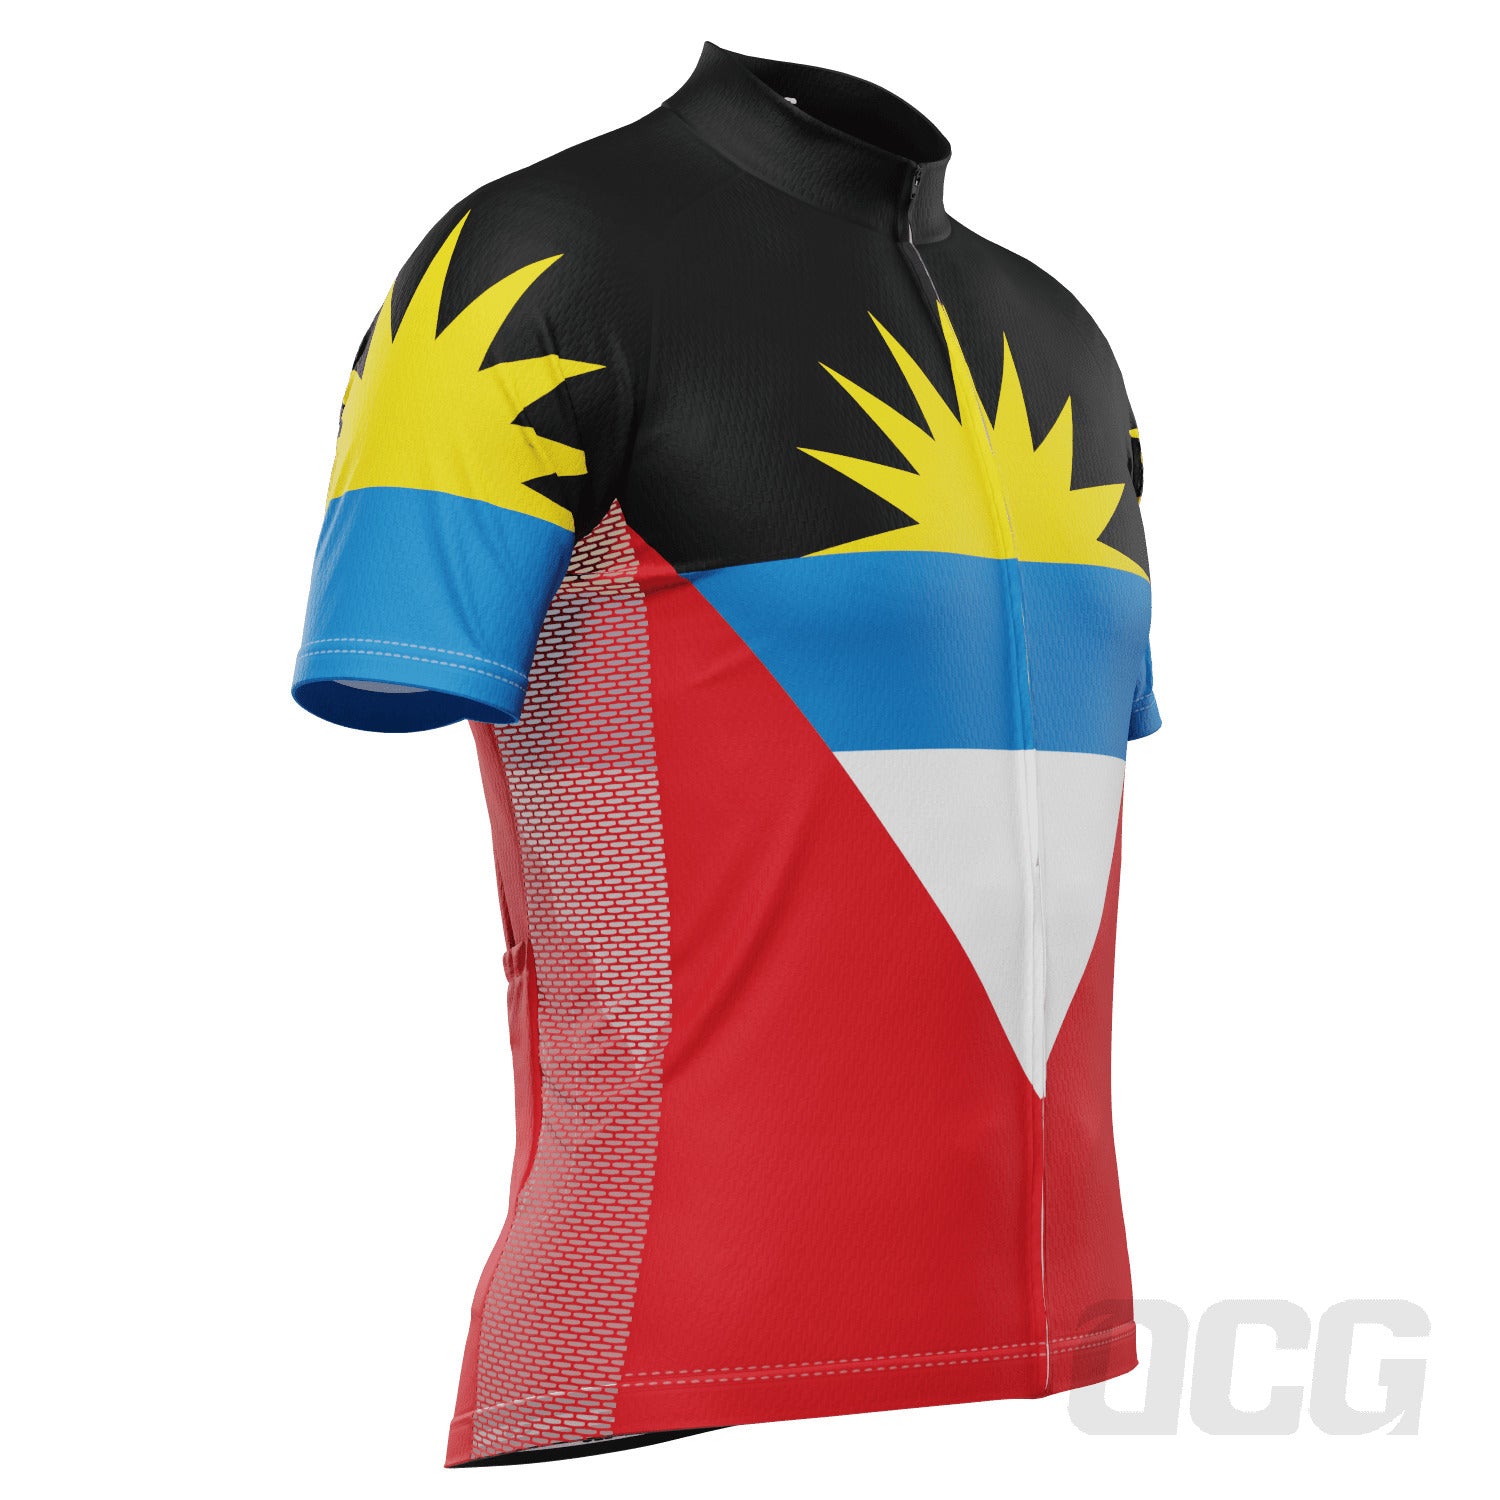 Men's Antigua and Barbuda National Flag Short Sleeve Cycling Jersey